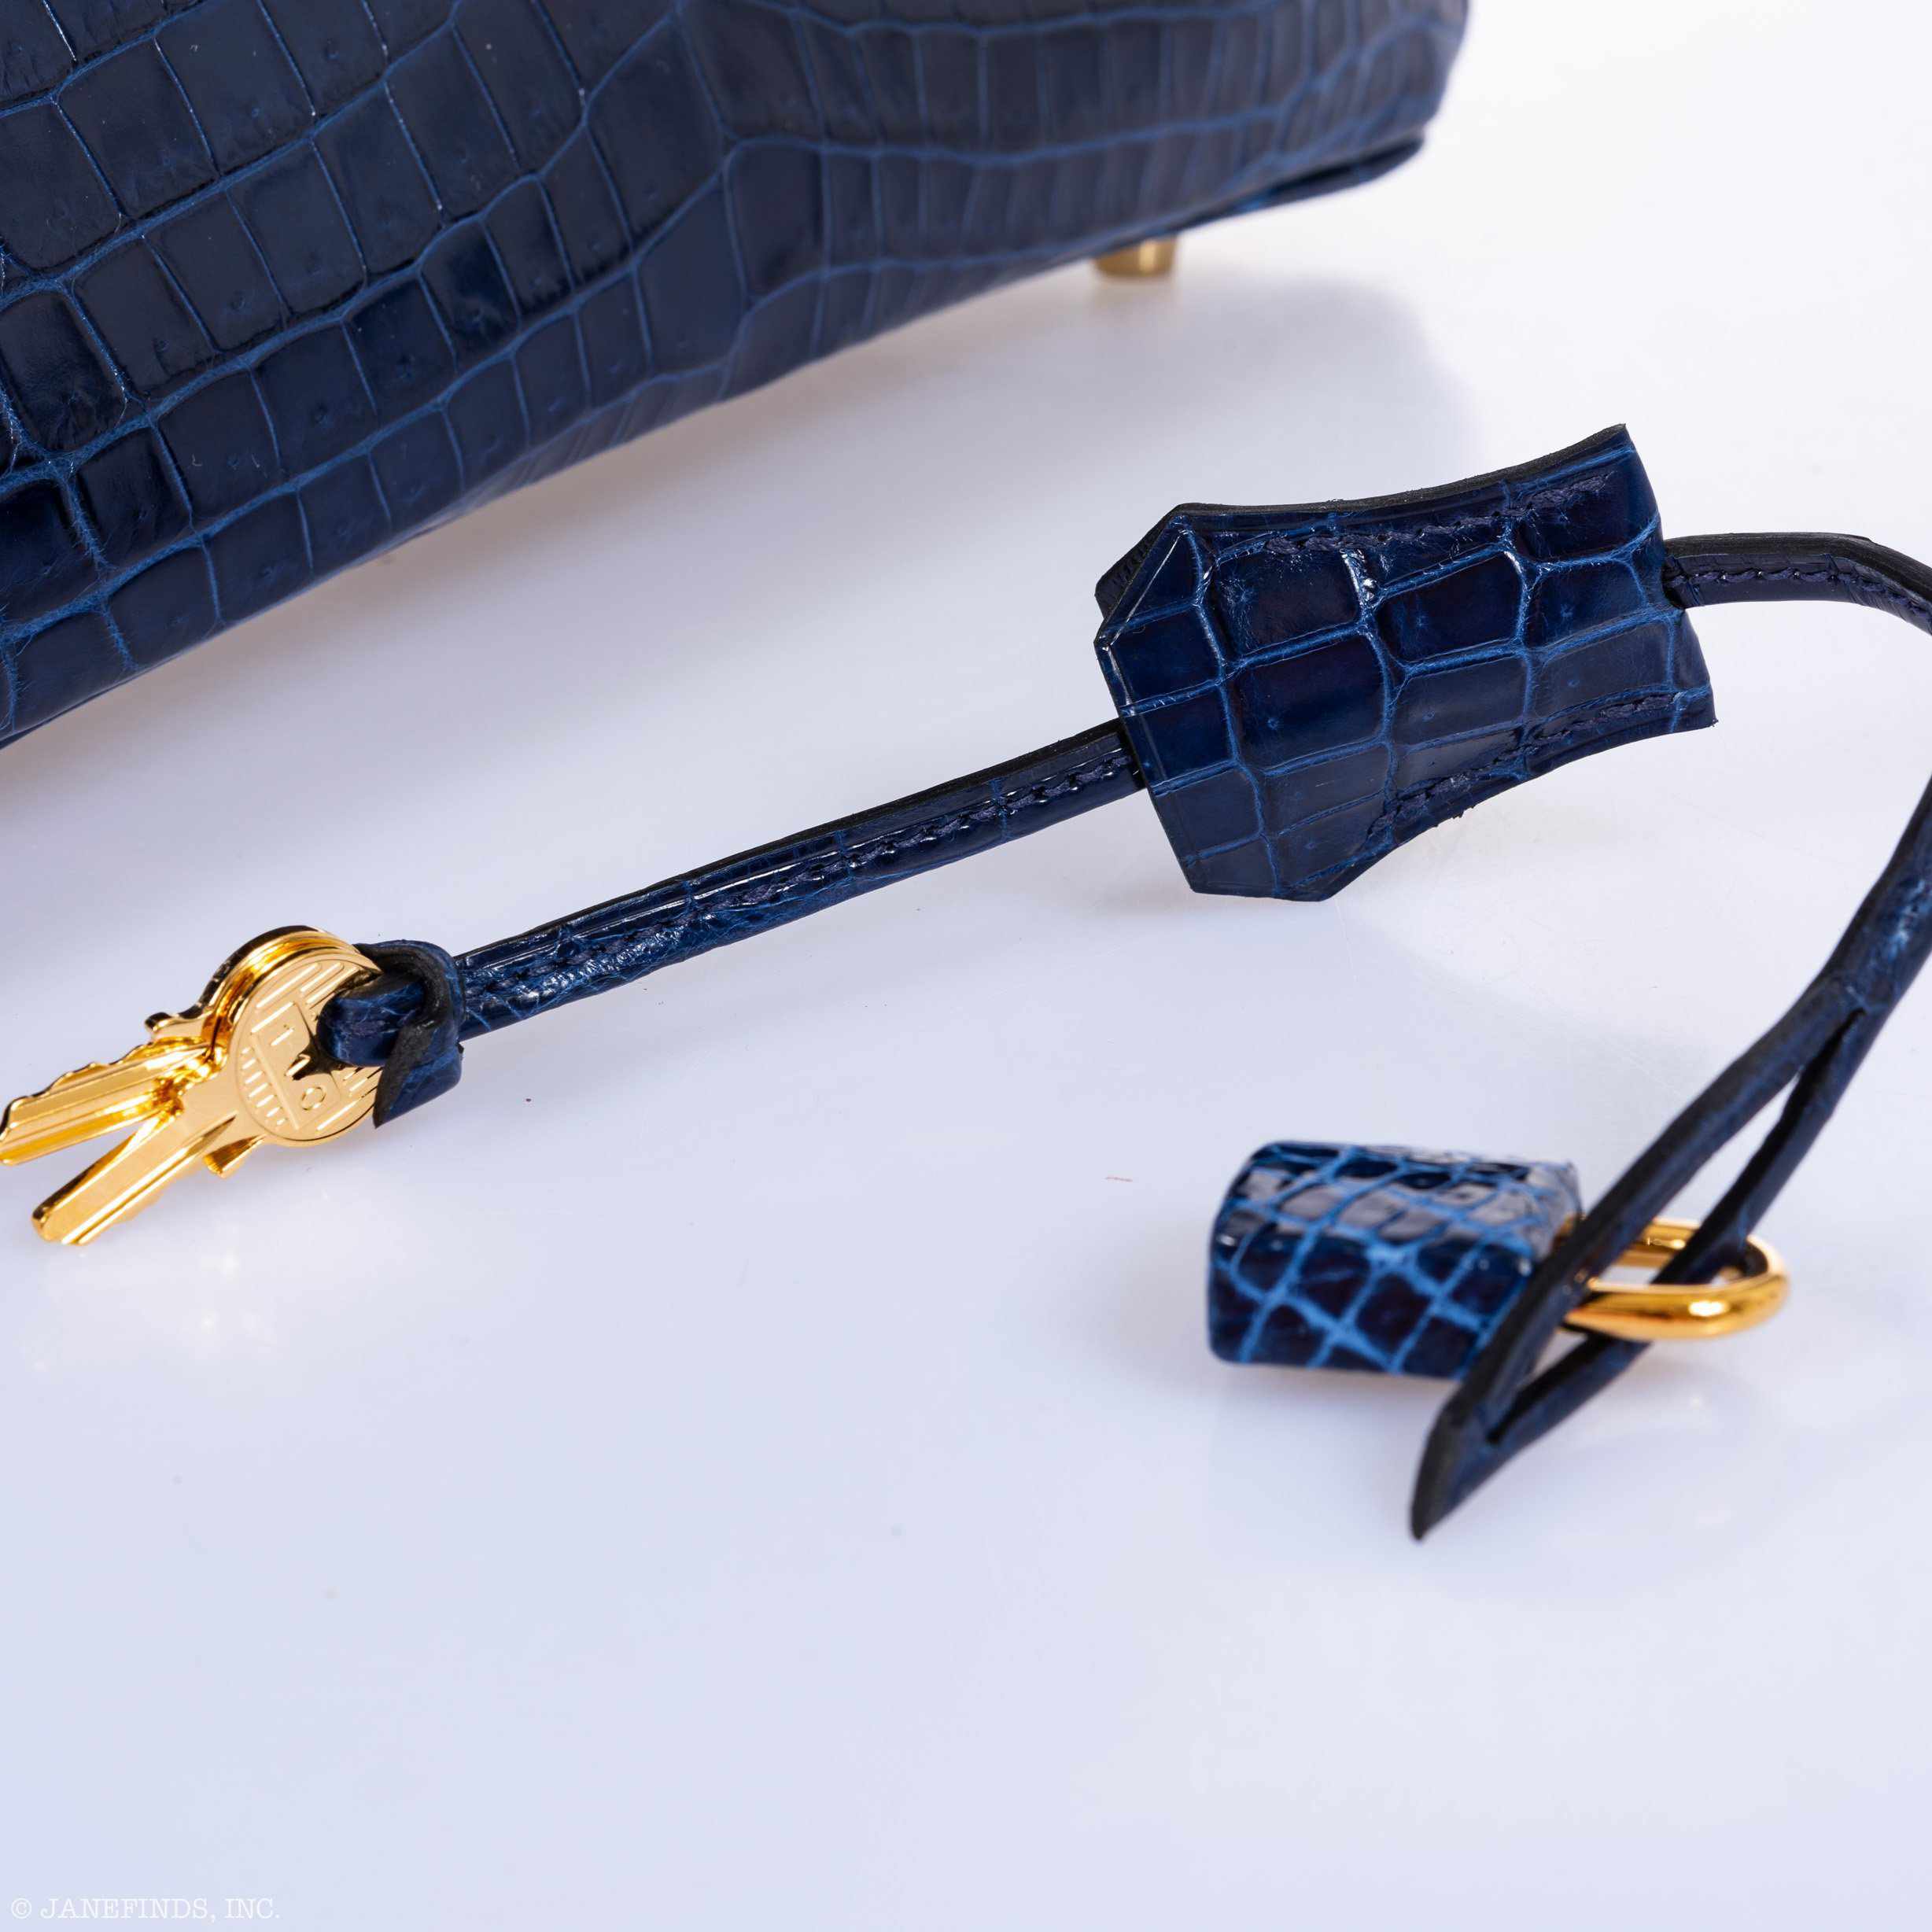 Hermès Birkin 30 Blue Saphir Semi-Matte Niloticus Crocodile Gold Hardware